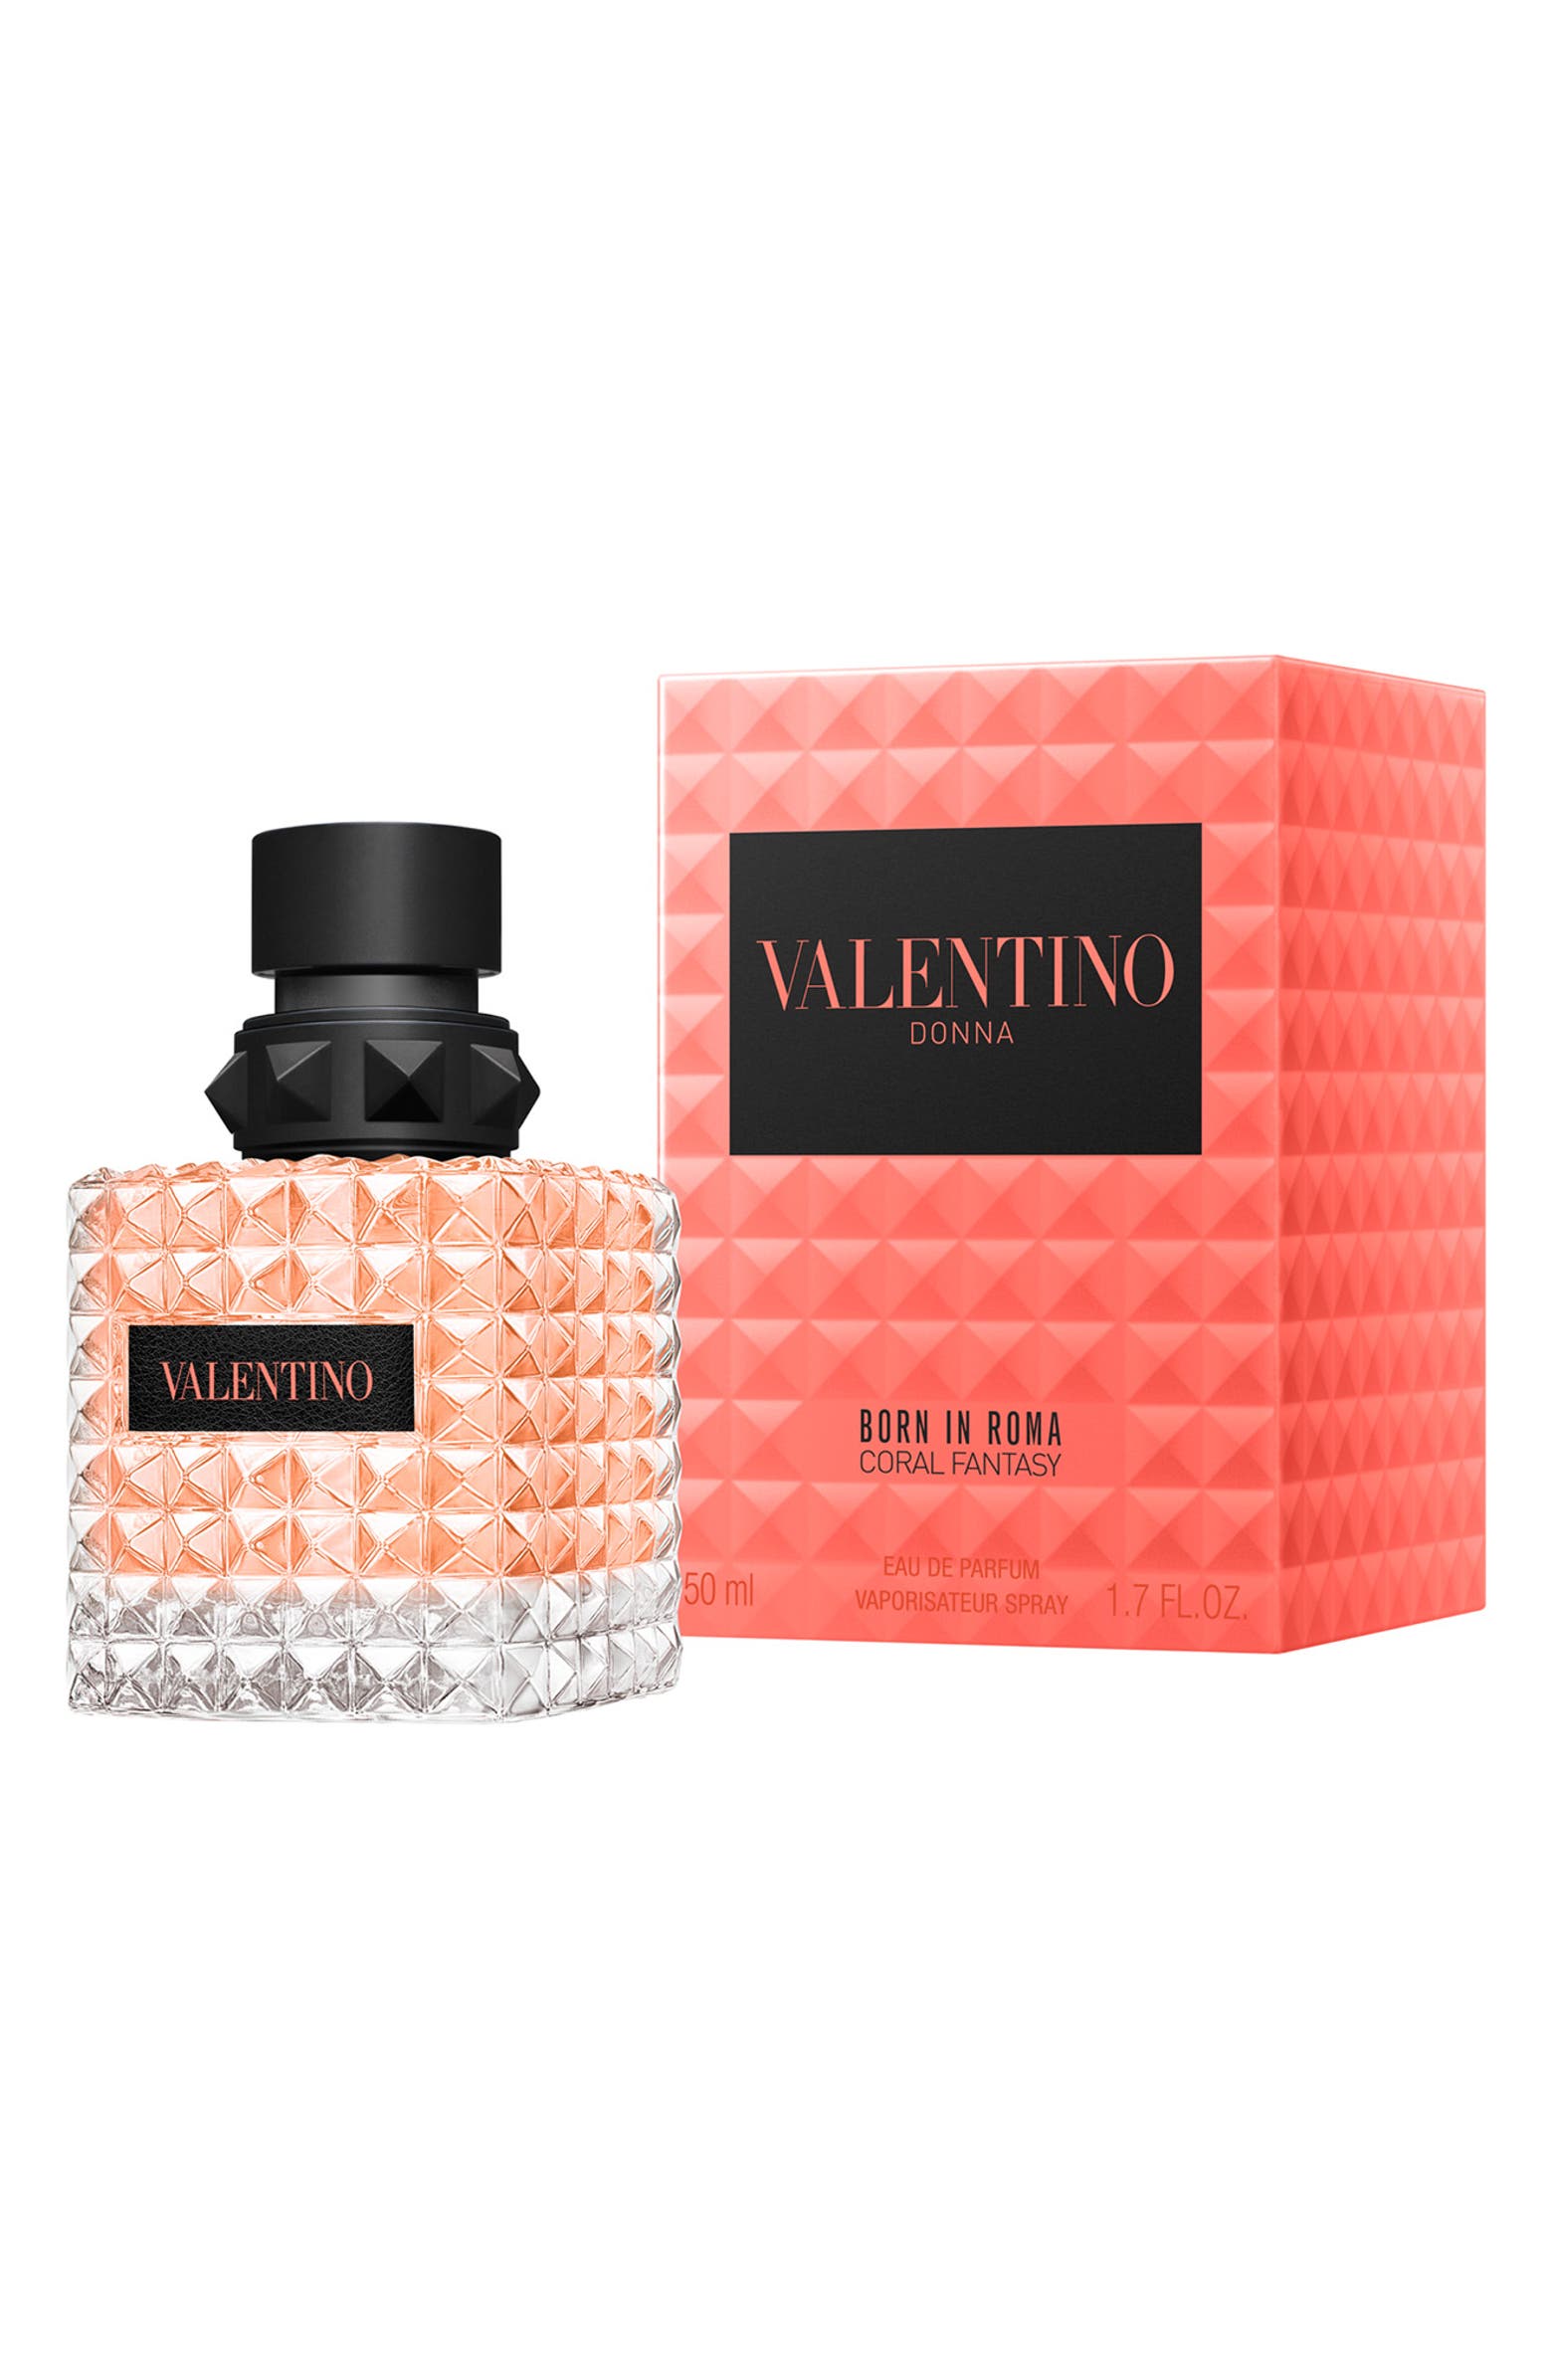 Valentino Donna Born in Roma Coral Fantasy Eau de Parfum | Nordstrom